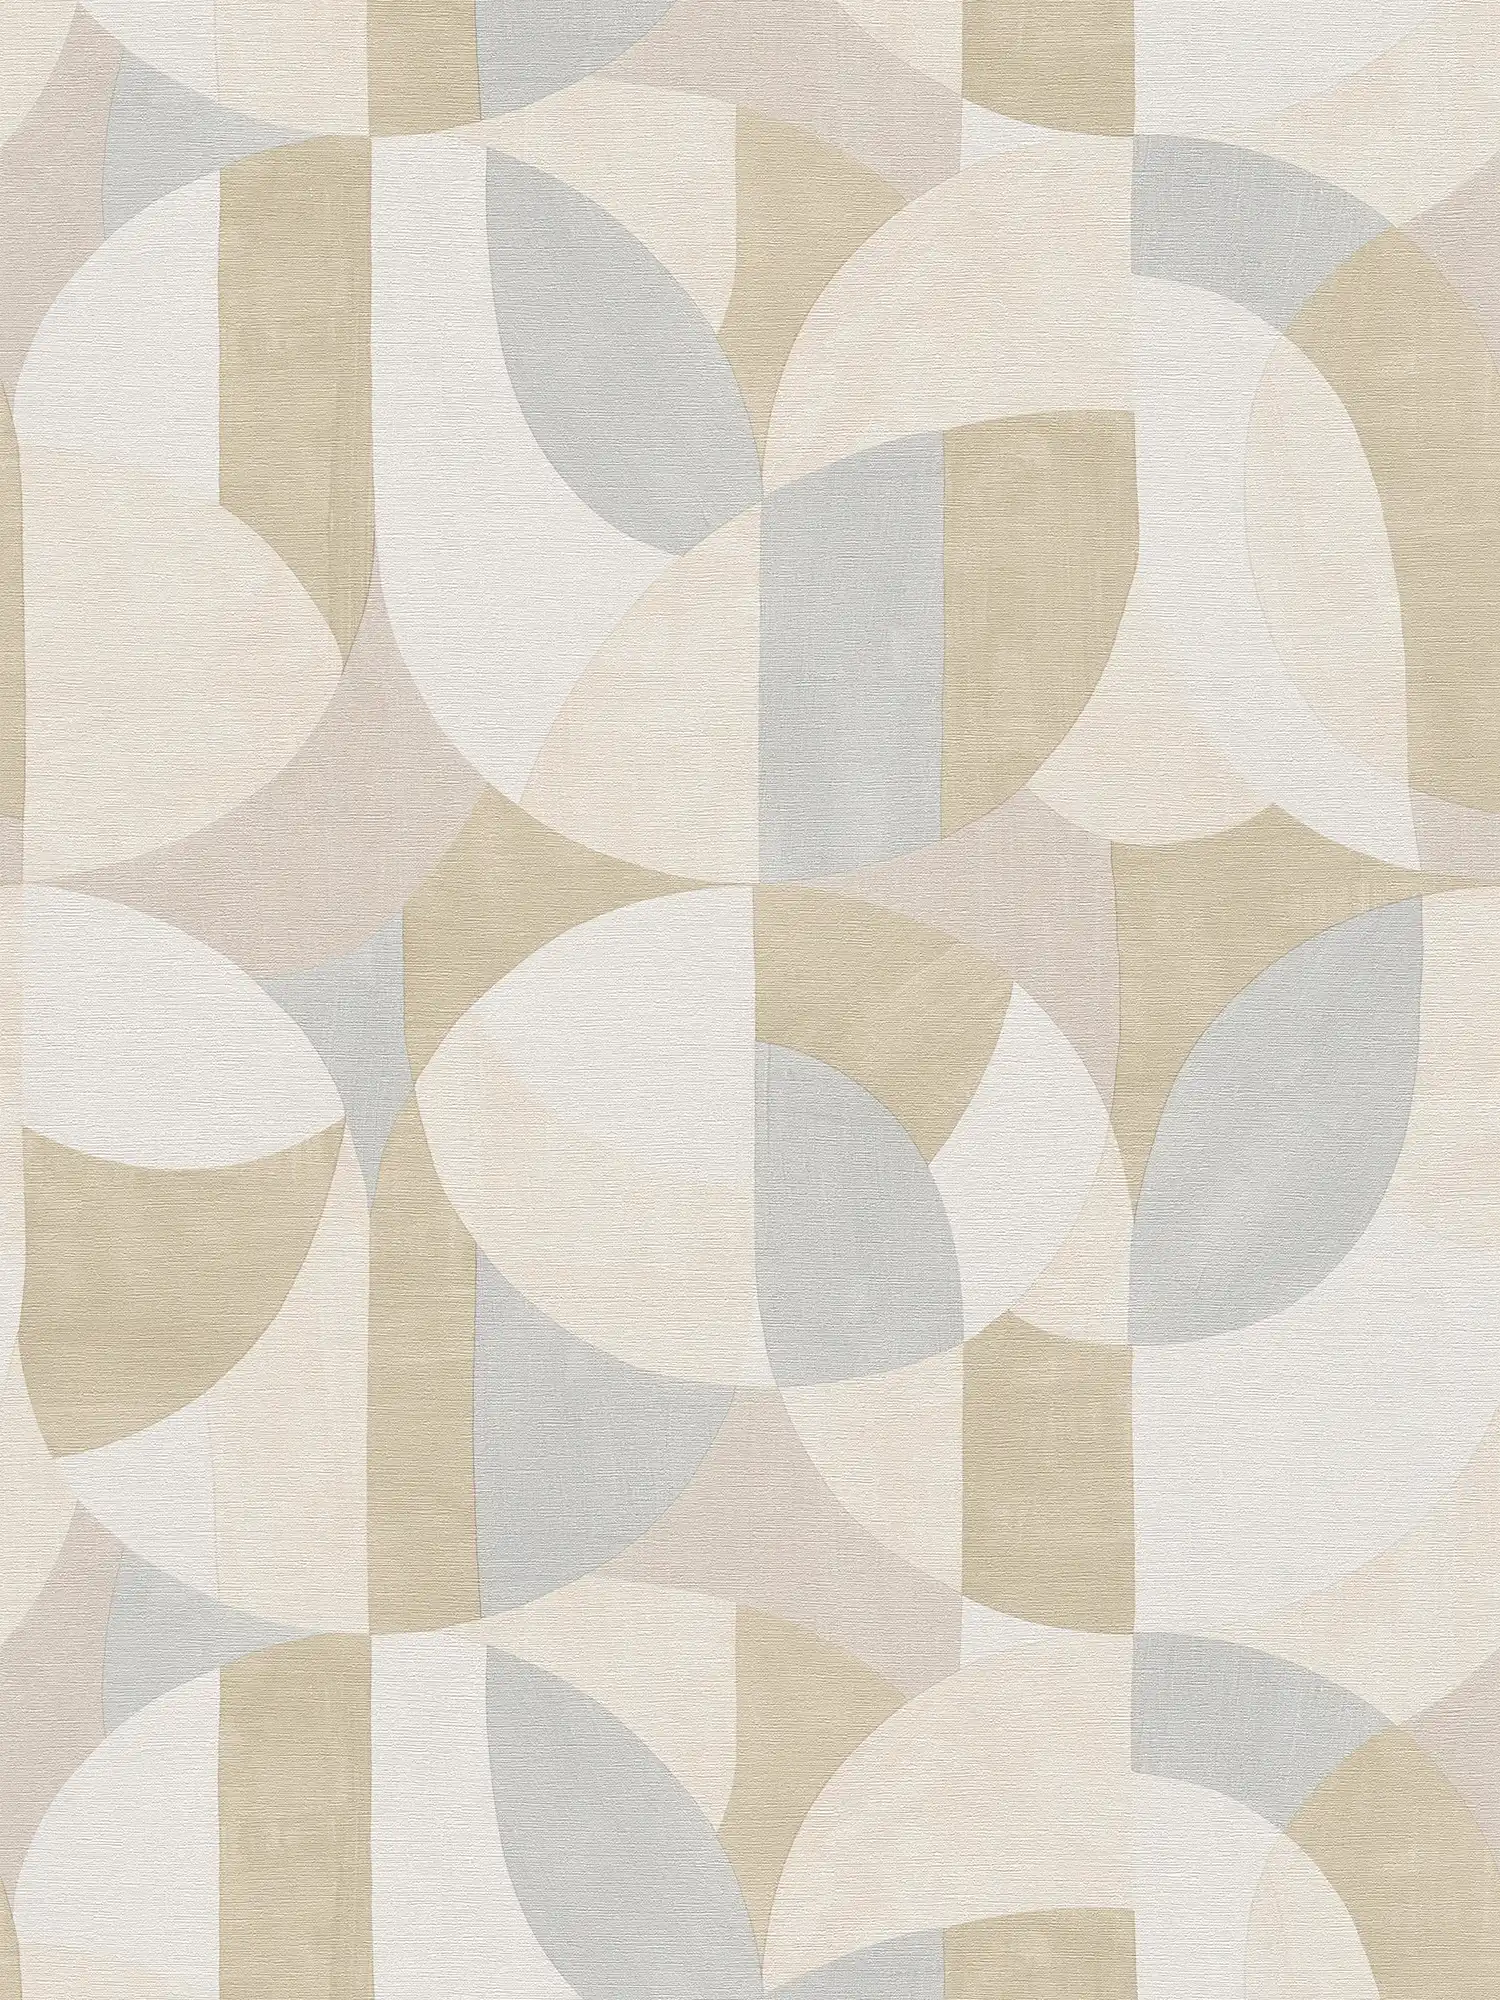         Abstract grafisch vliesbehang in Bauhaus-stijl - grijs, crème, beige
    